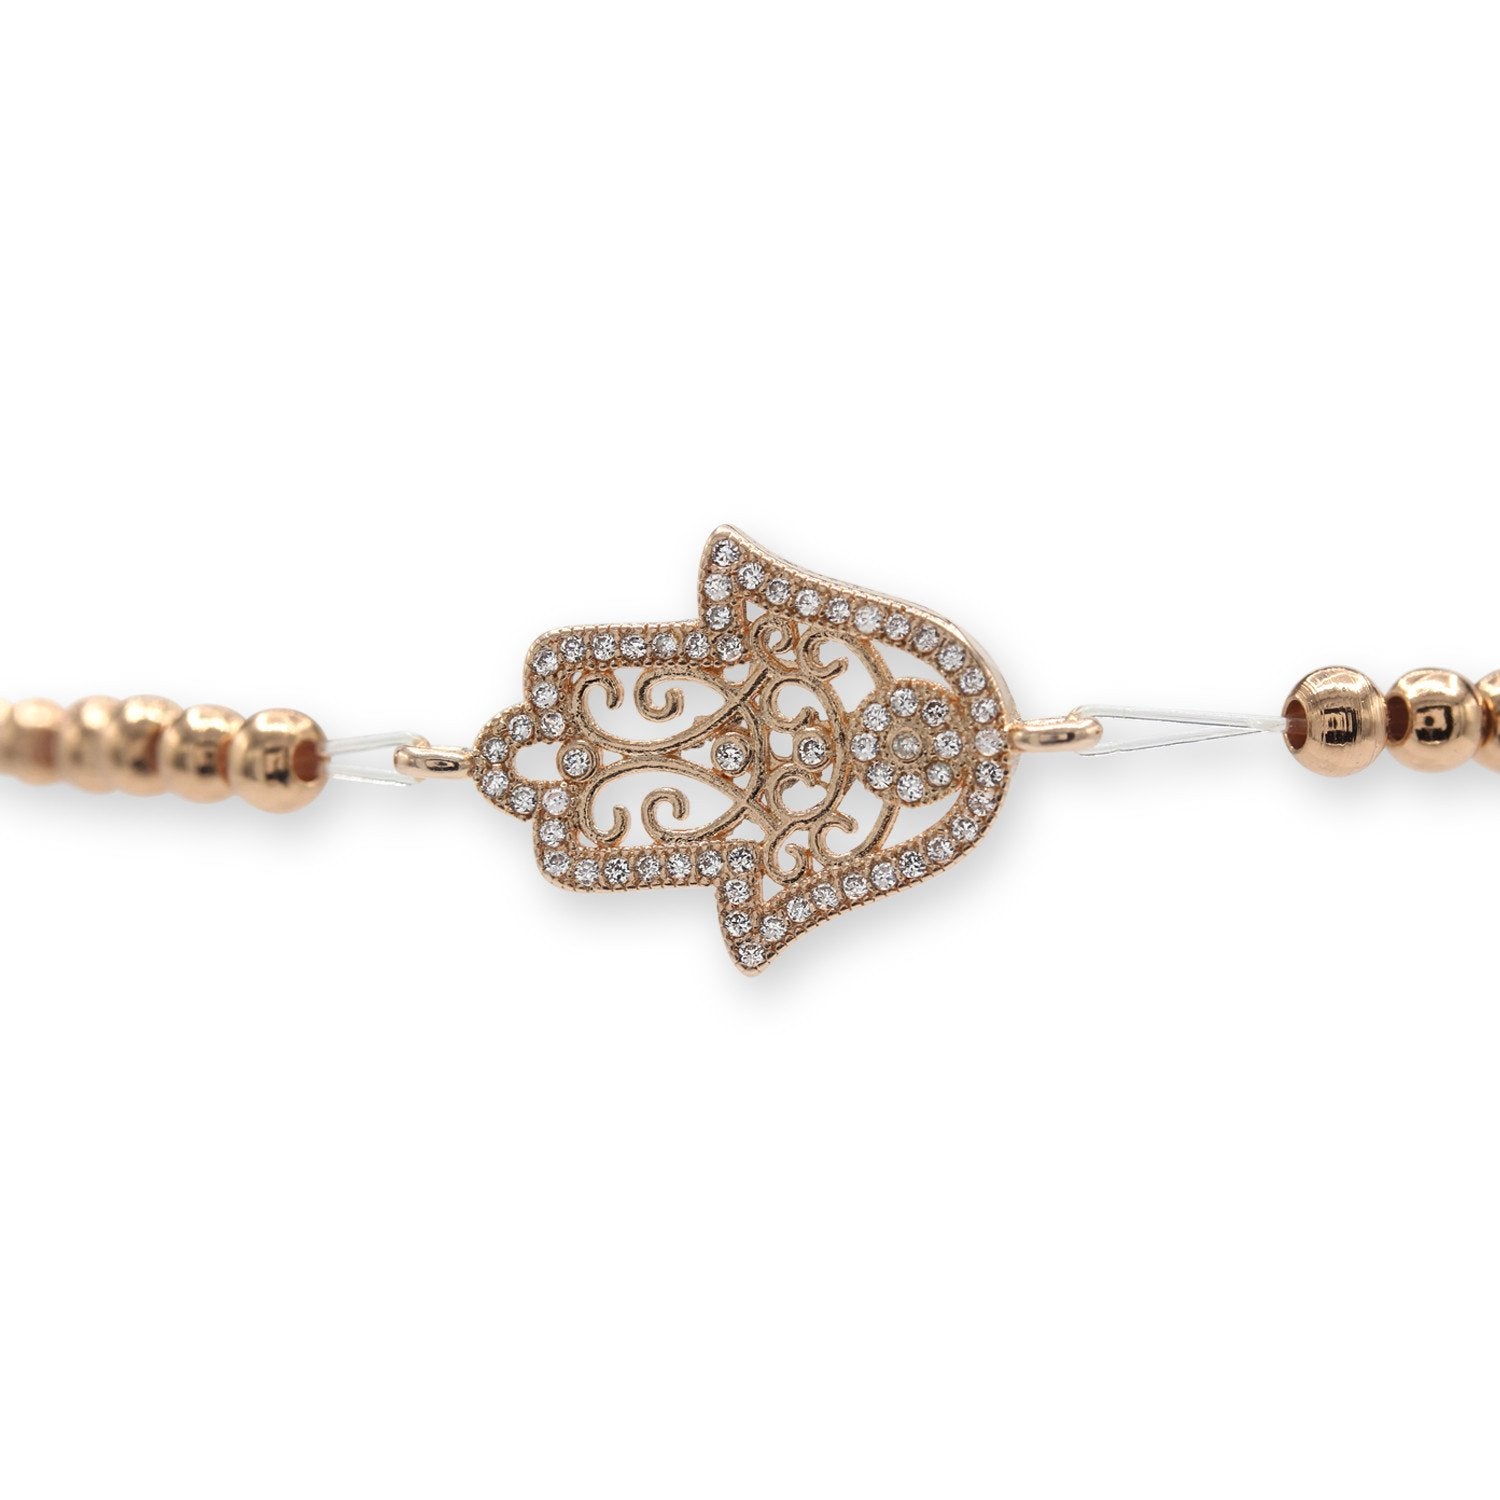 Cubic Zirconia Bead Bracelet Women Jewelry